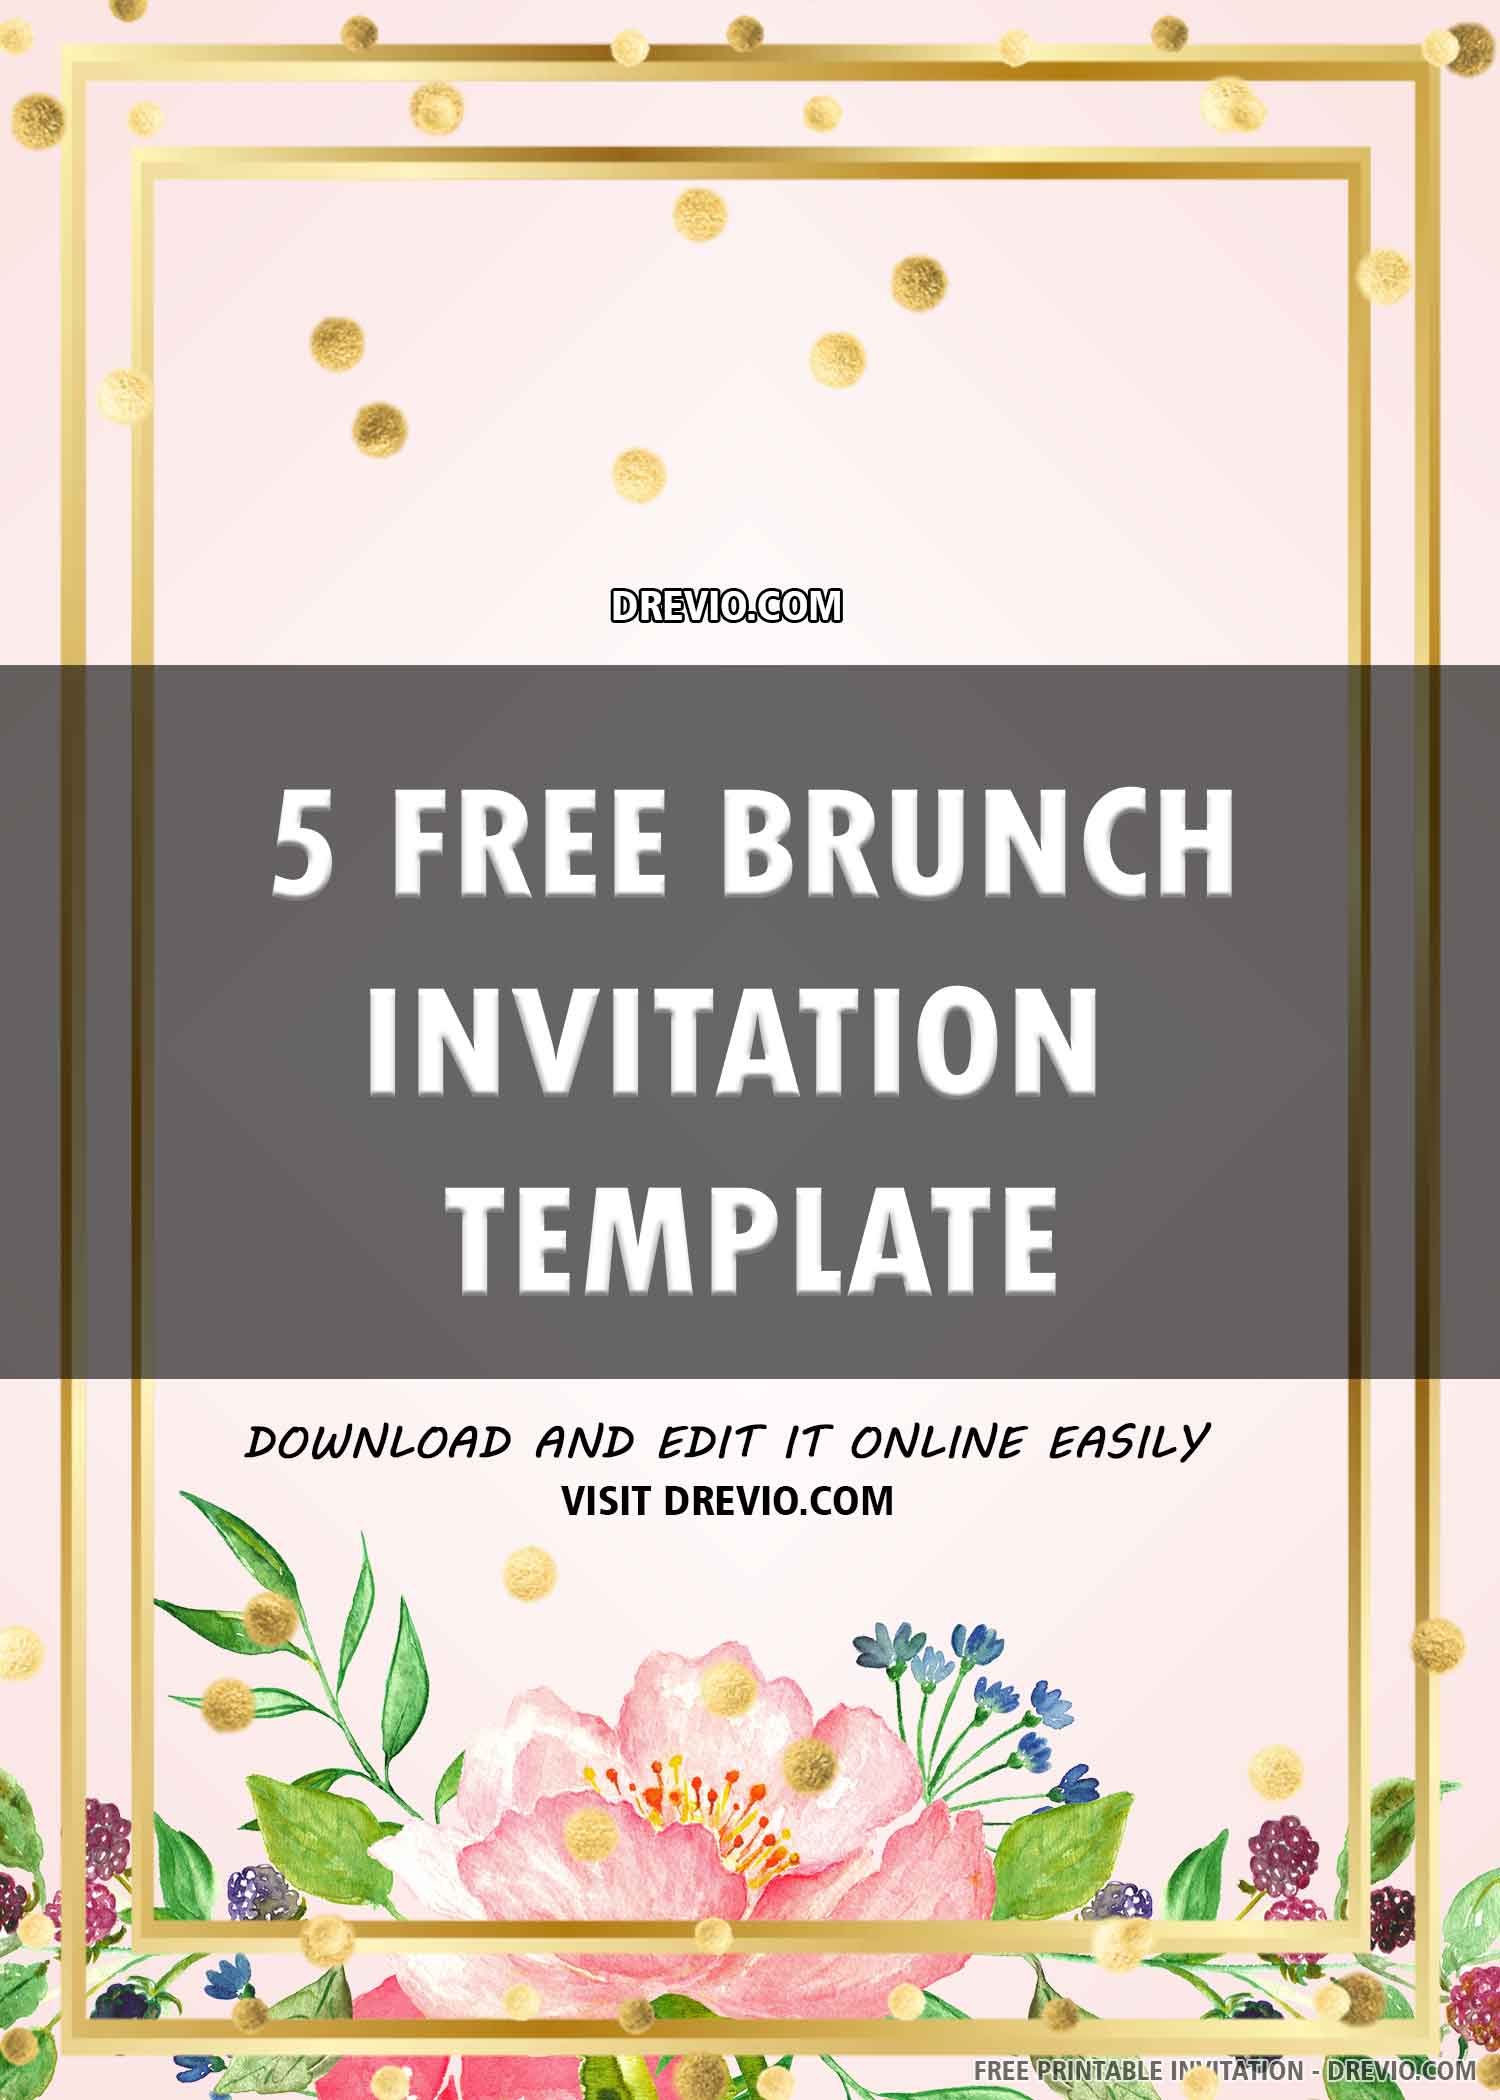  FREE PRINTABLE Brunch Invitation Template DREVIO